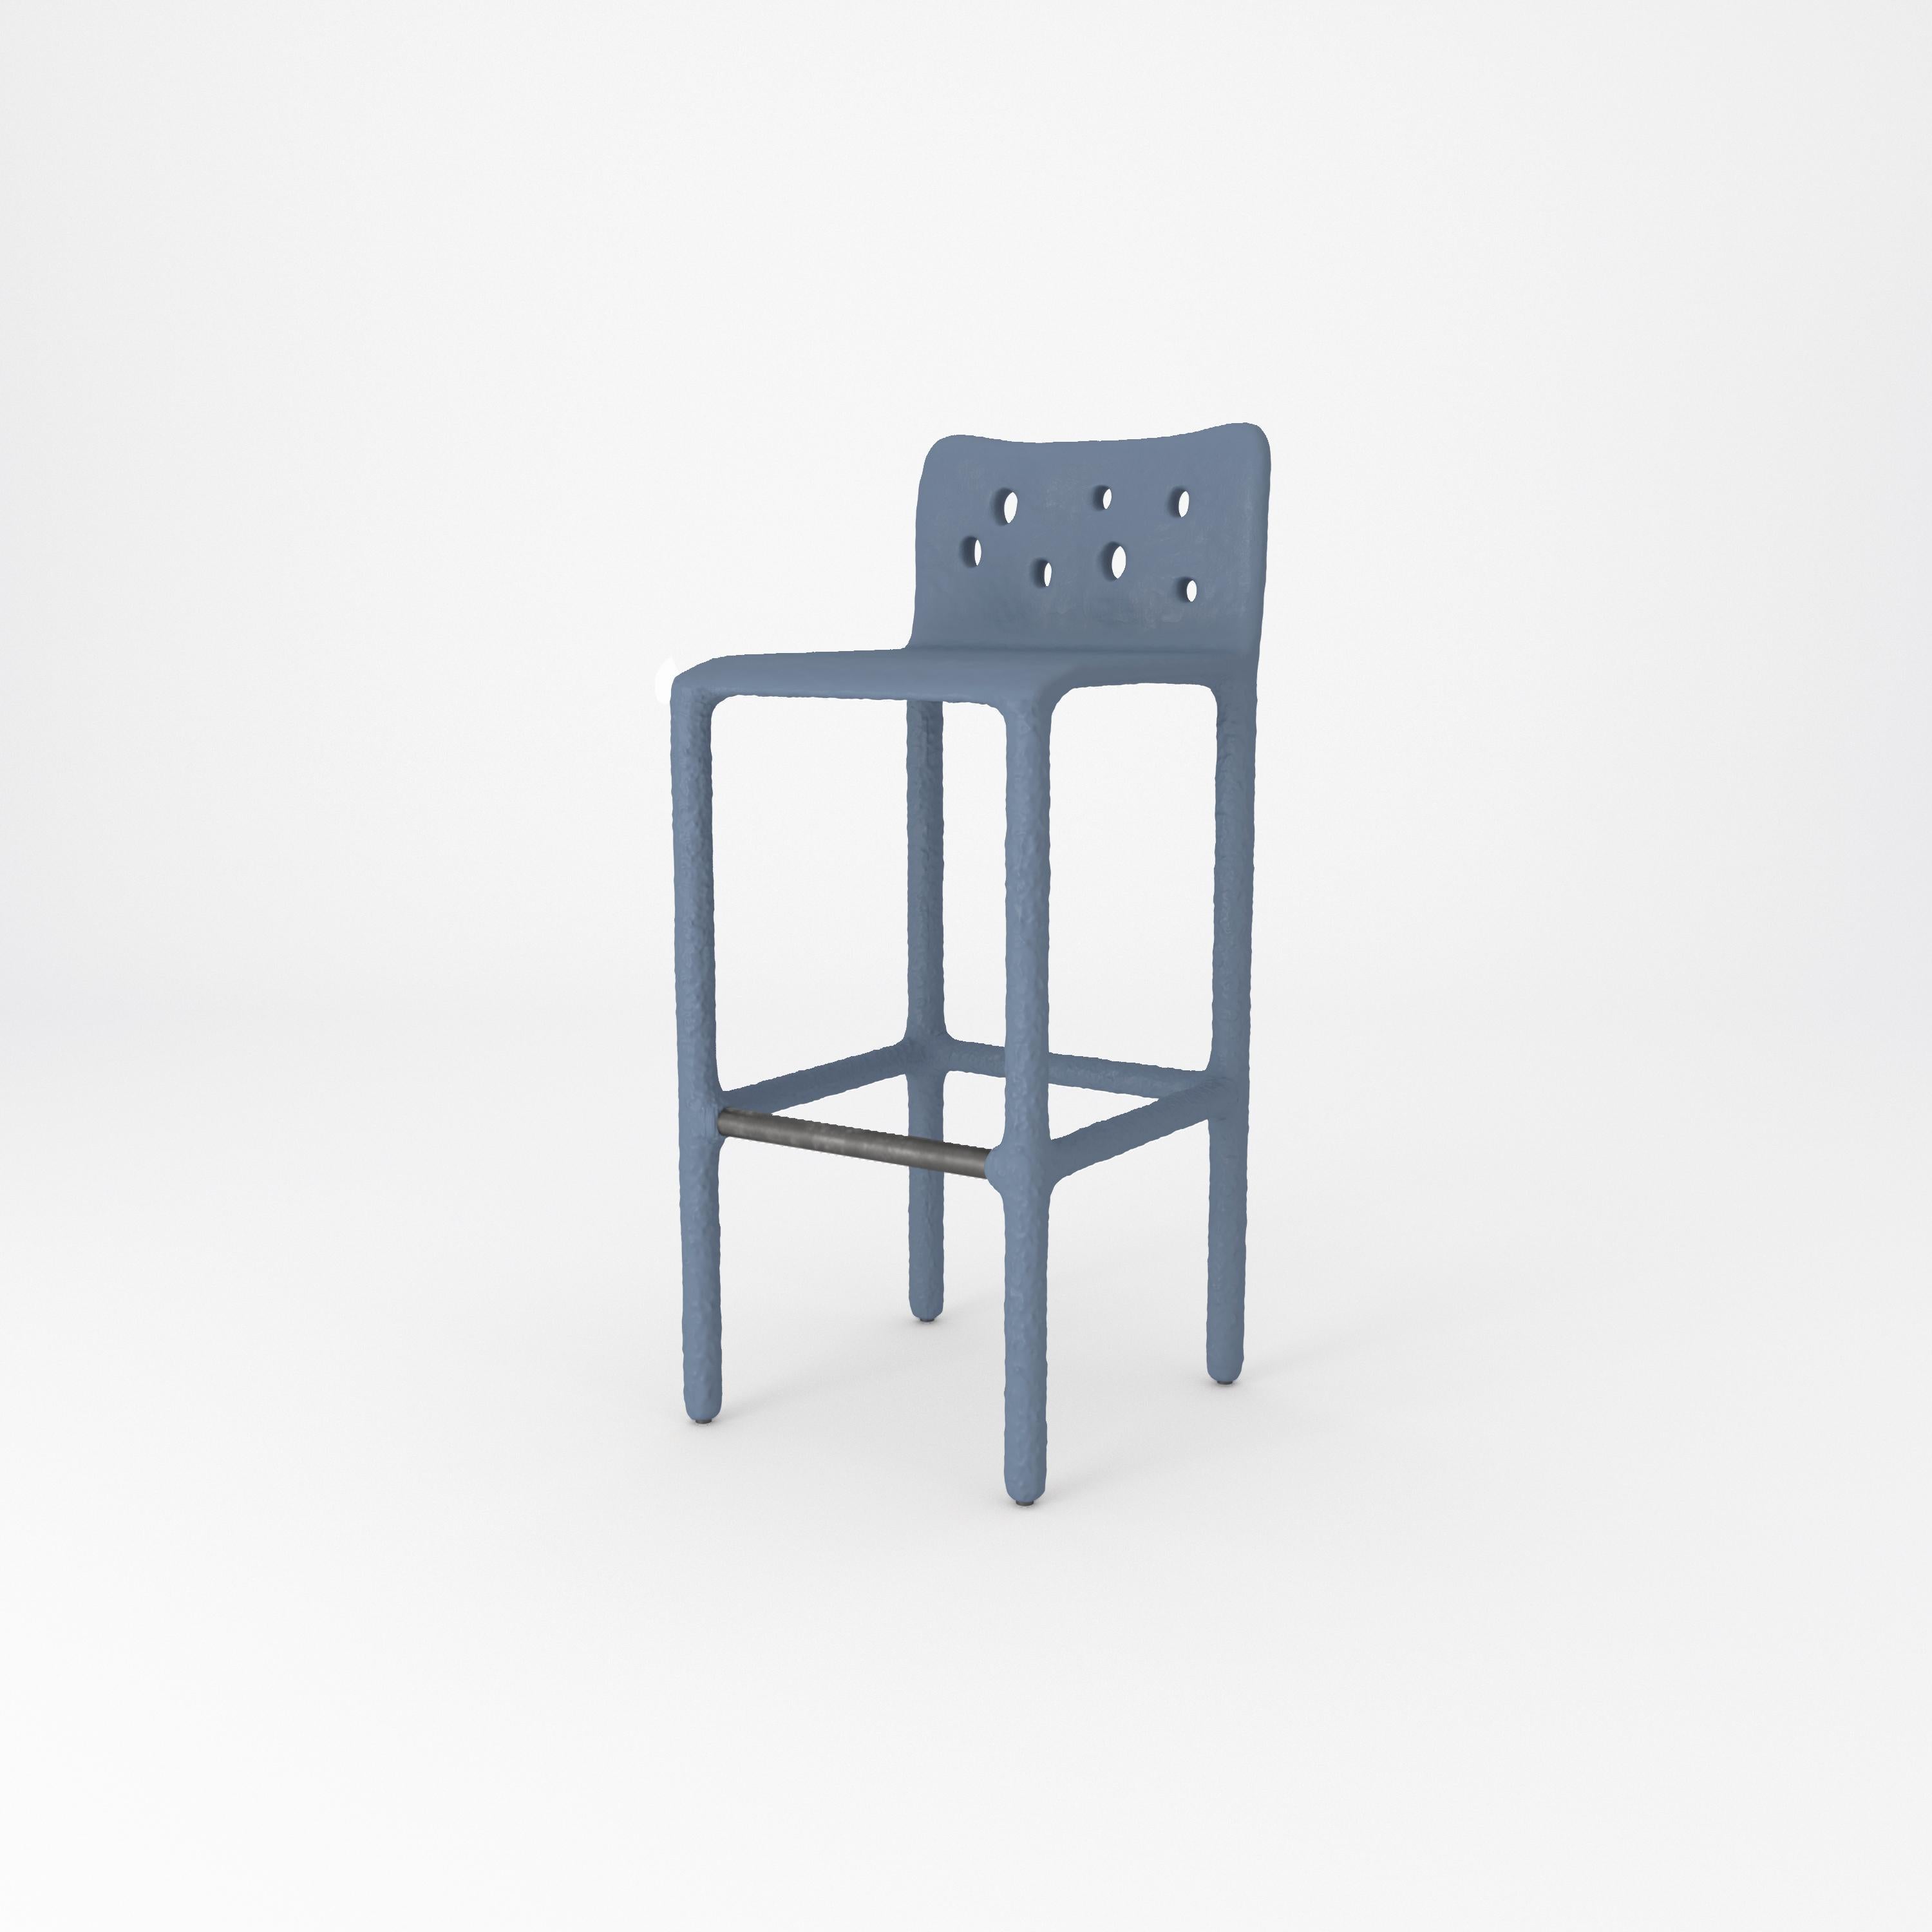 White Sculpted Contemporary Chair by FAINA 5